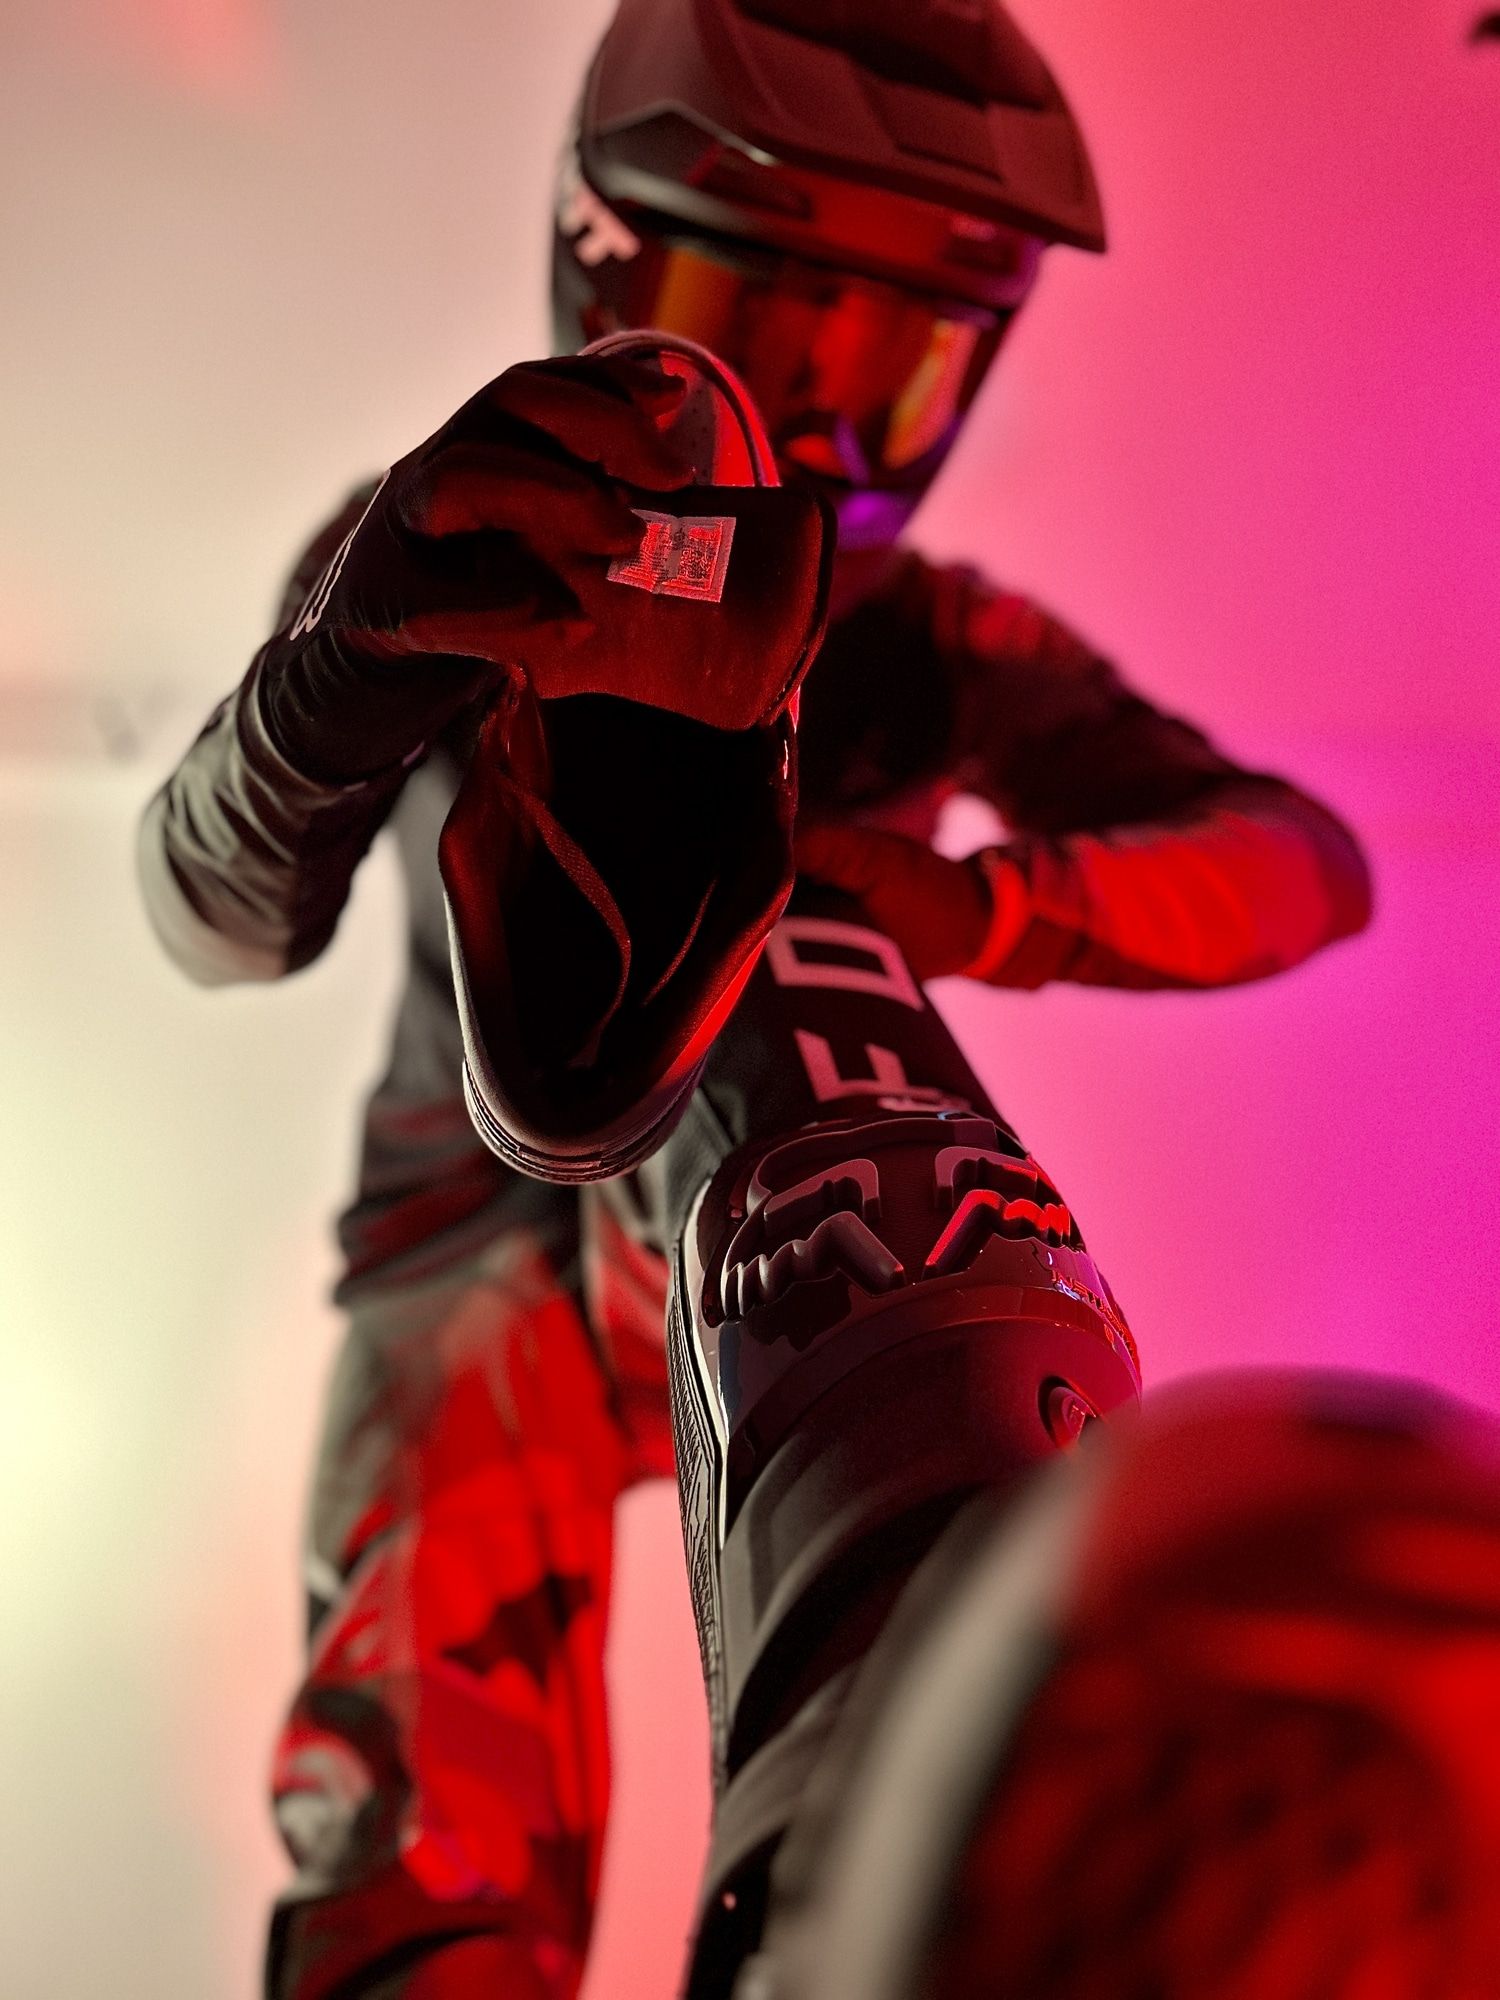 Jordans Sneaker & Motocross outfit